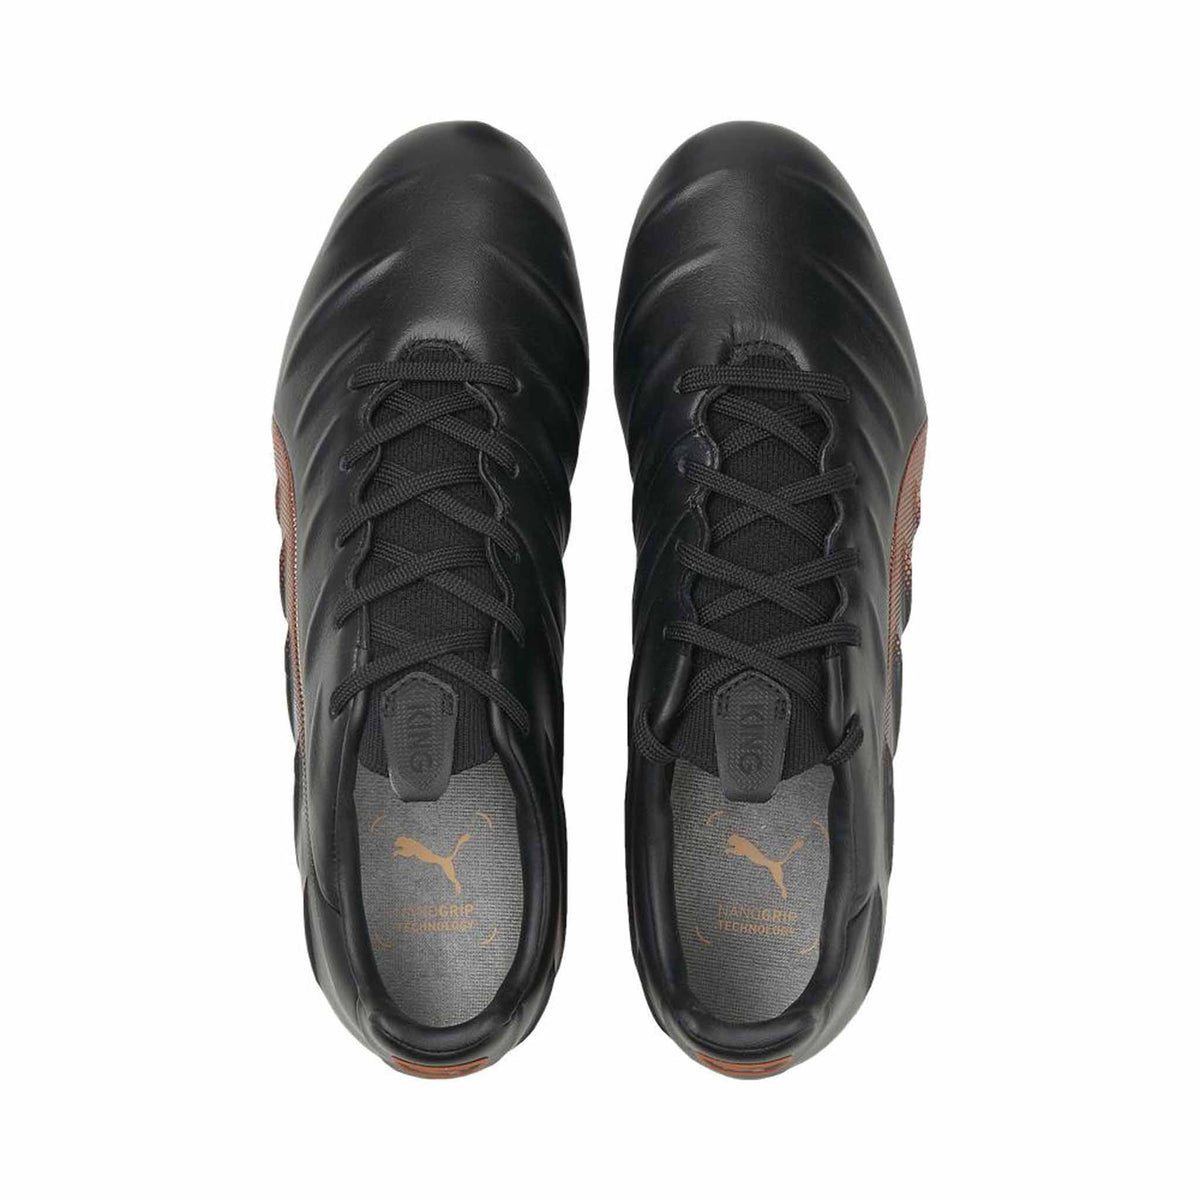 Puma King Platinum 21 FG chaussures de soccer - Puma Black / Neon Citrus